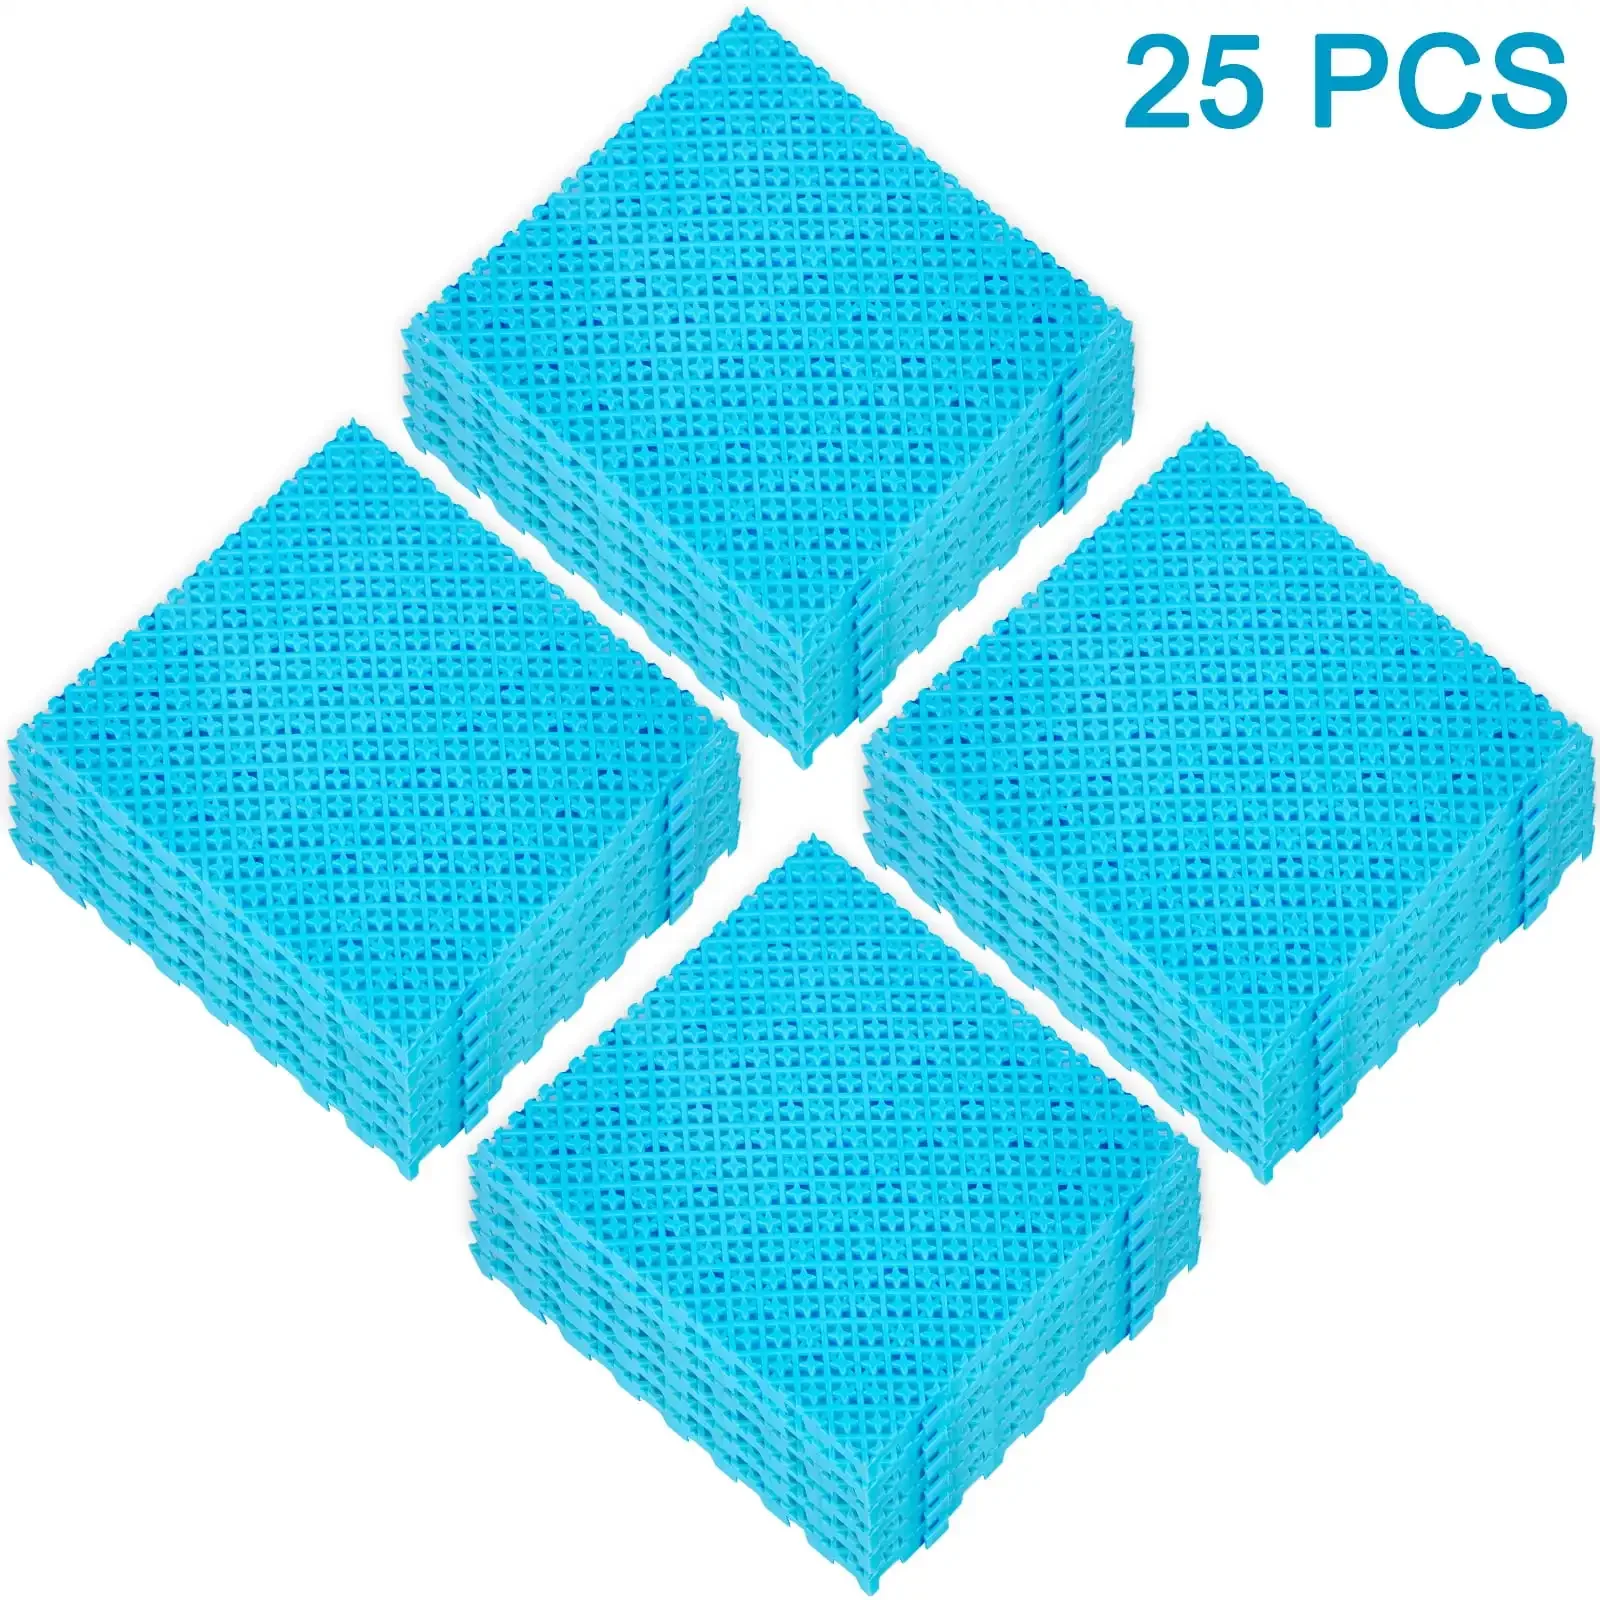 

VEVOR Drainage Tiles Interlocking 25 Pack Blue, Outdoor Modular Interlocking Deck Tile 11.8x11.8x0.5 inches, Dry De